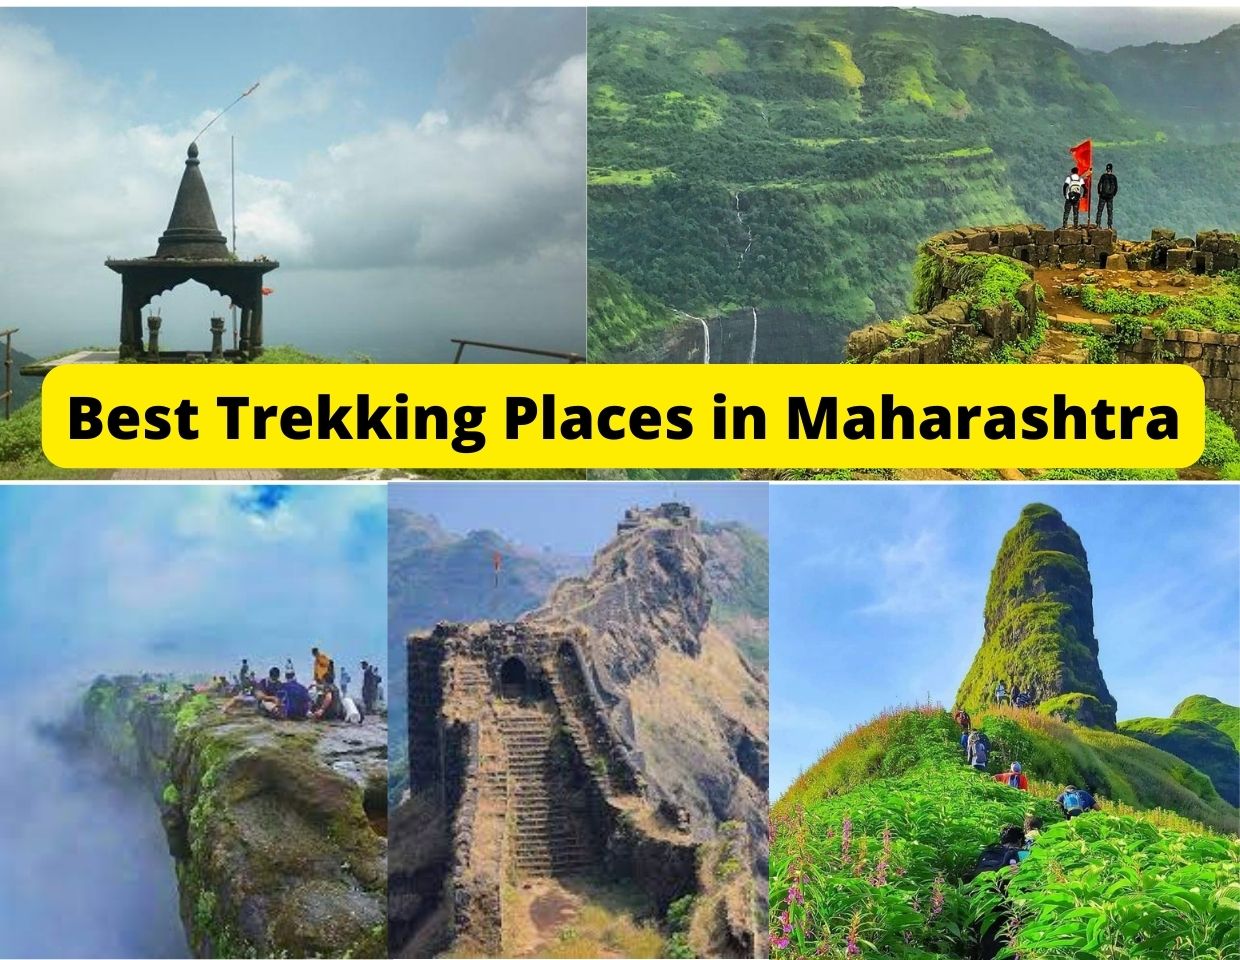 Best Trekking Places in Maharashtra